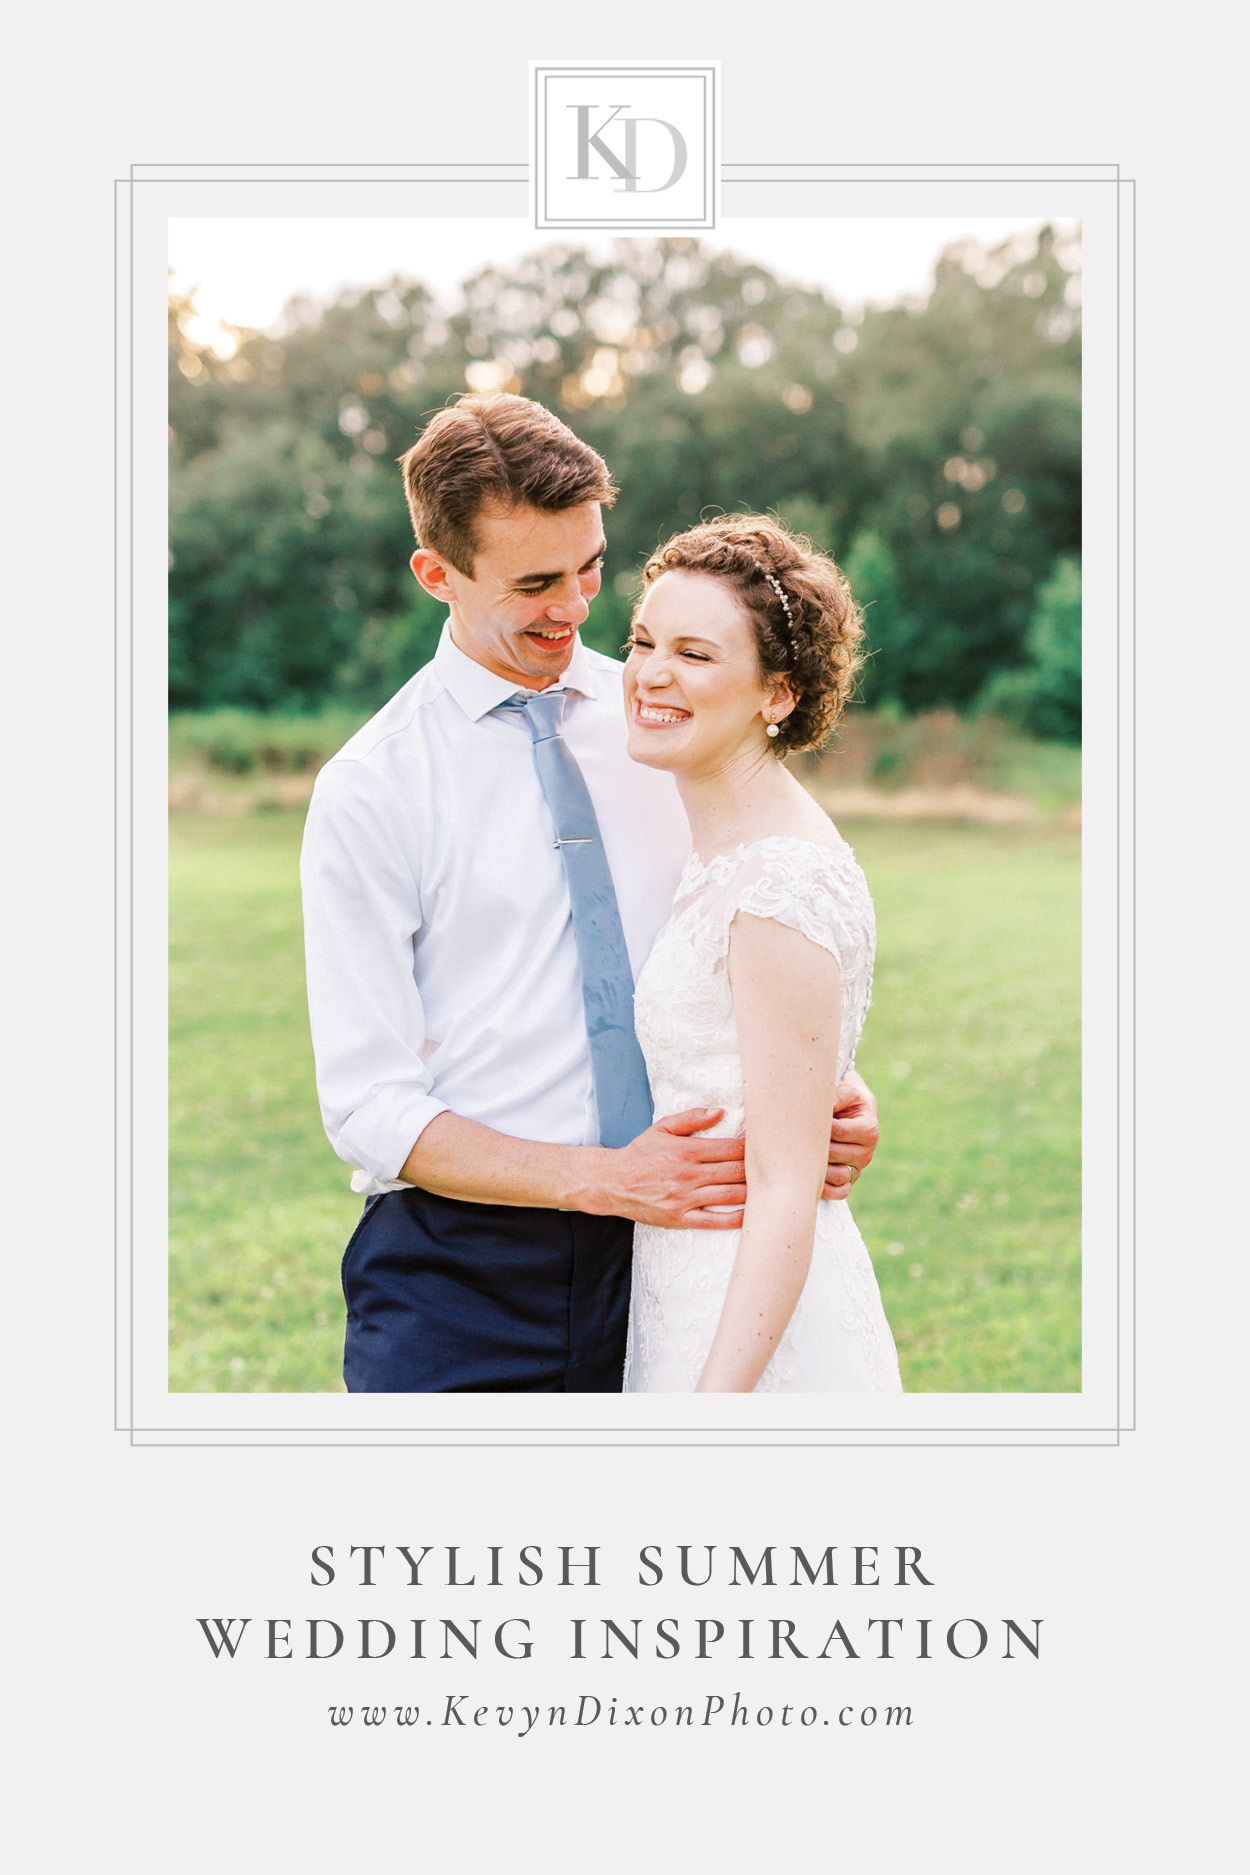 Stylish Summer Wedding Inspiration pin image